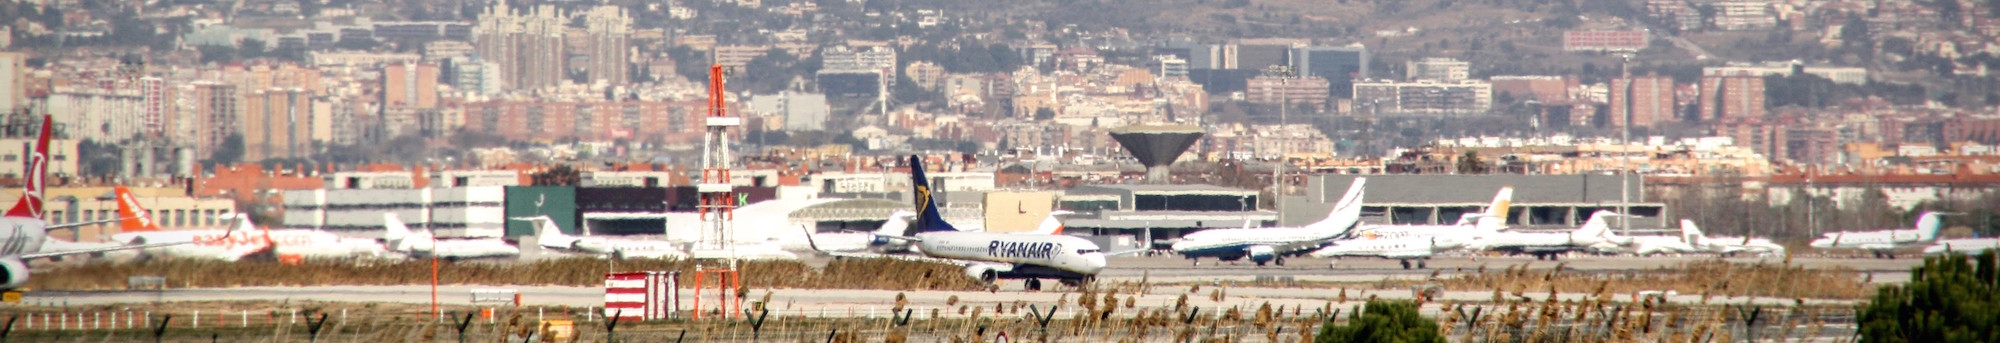 Cheapest flight deals per destination from Palma de Mallorca (PMI)  from $7